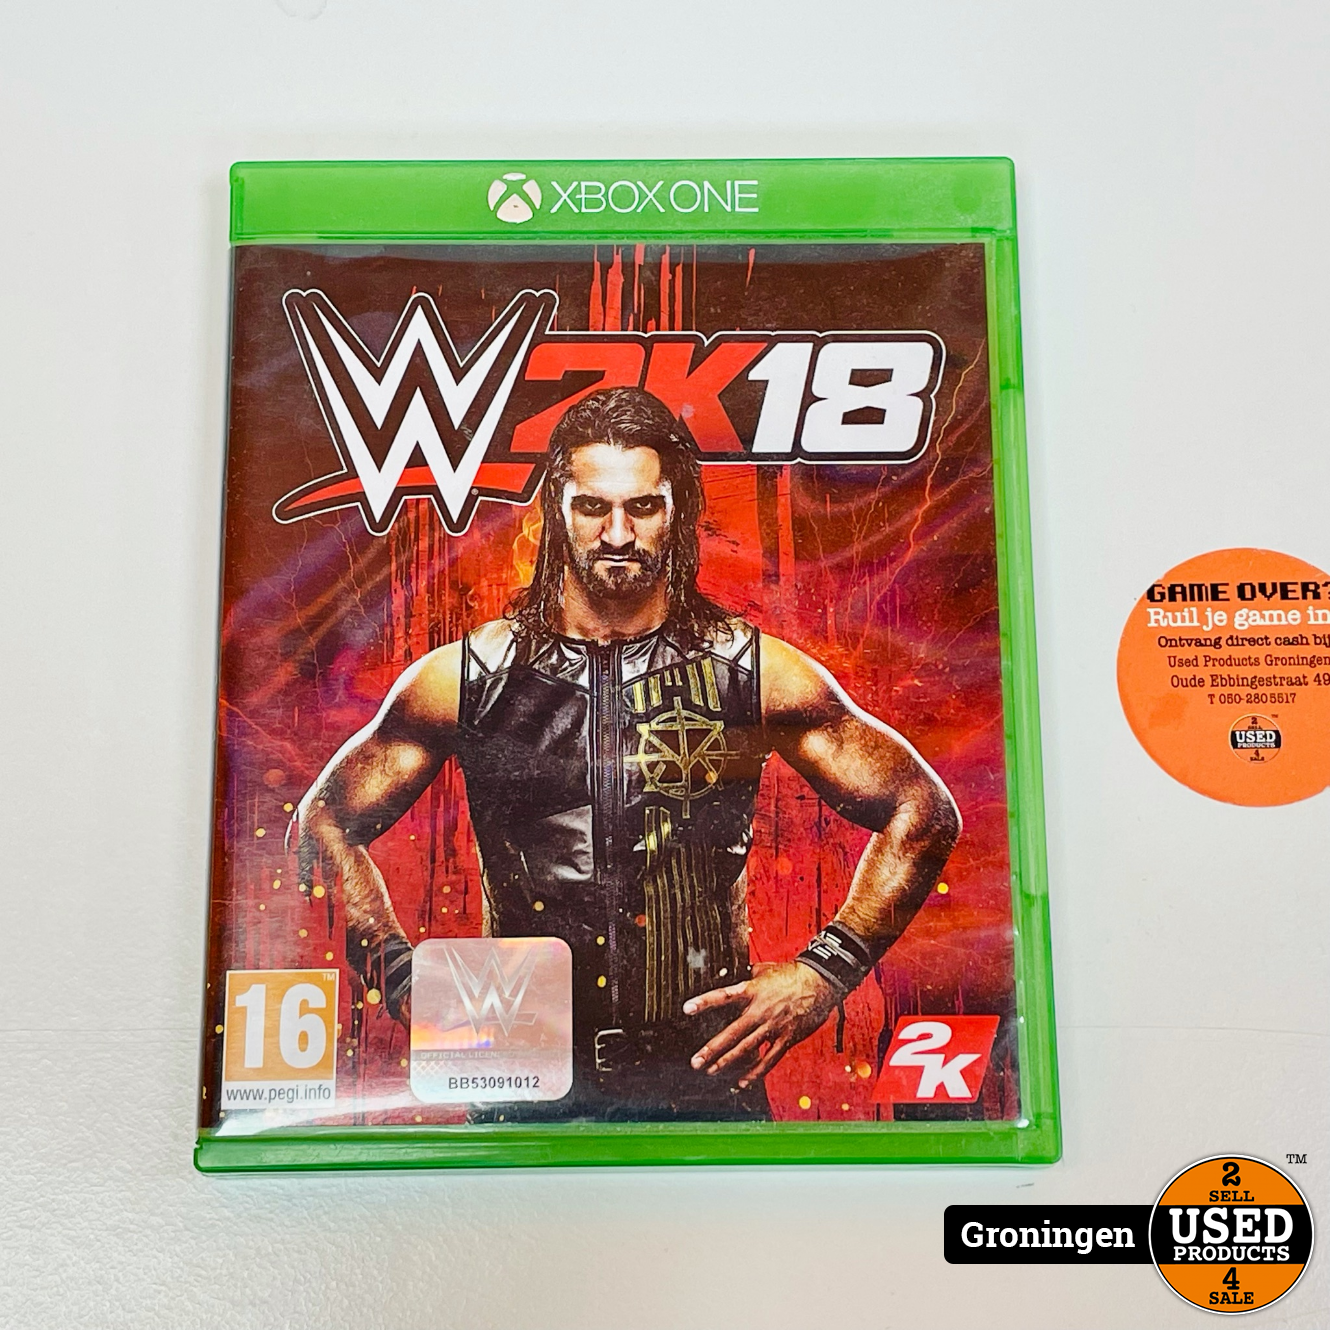 toespraak huren serveerster Microsoft Xbox One [Xbox One] WWE 2K18 - Used Products Groningen